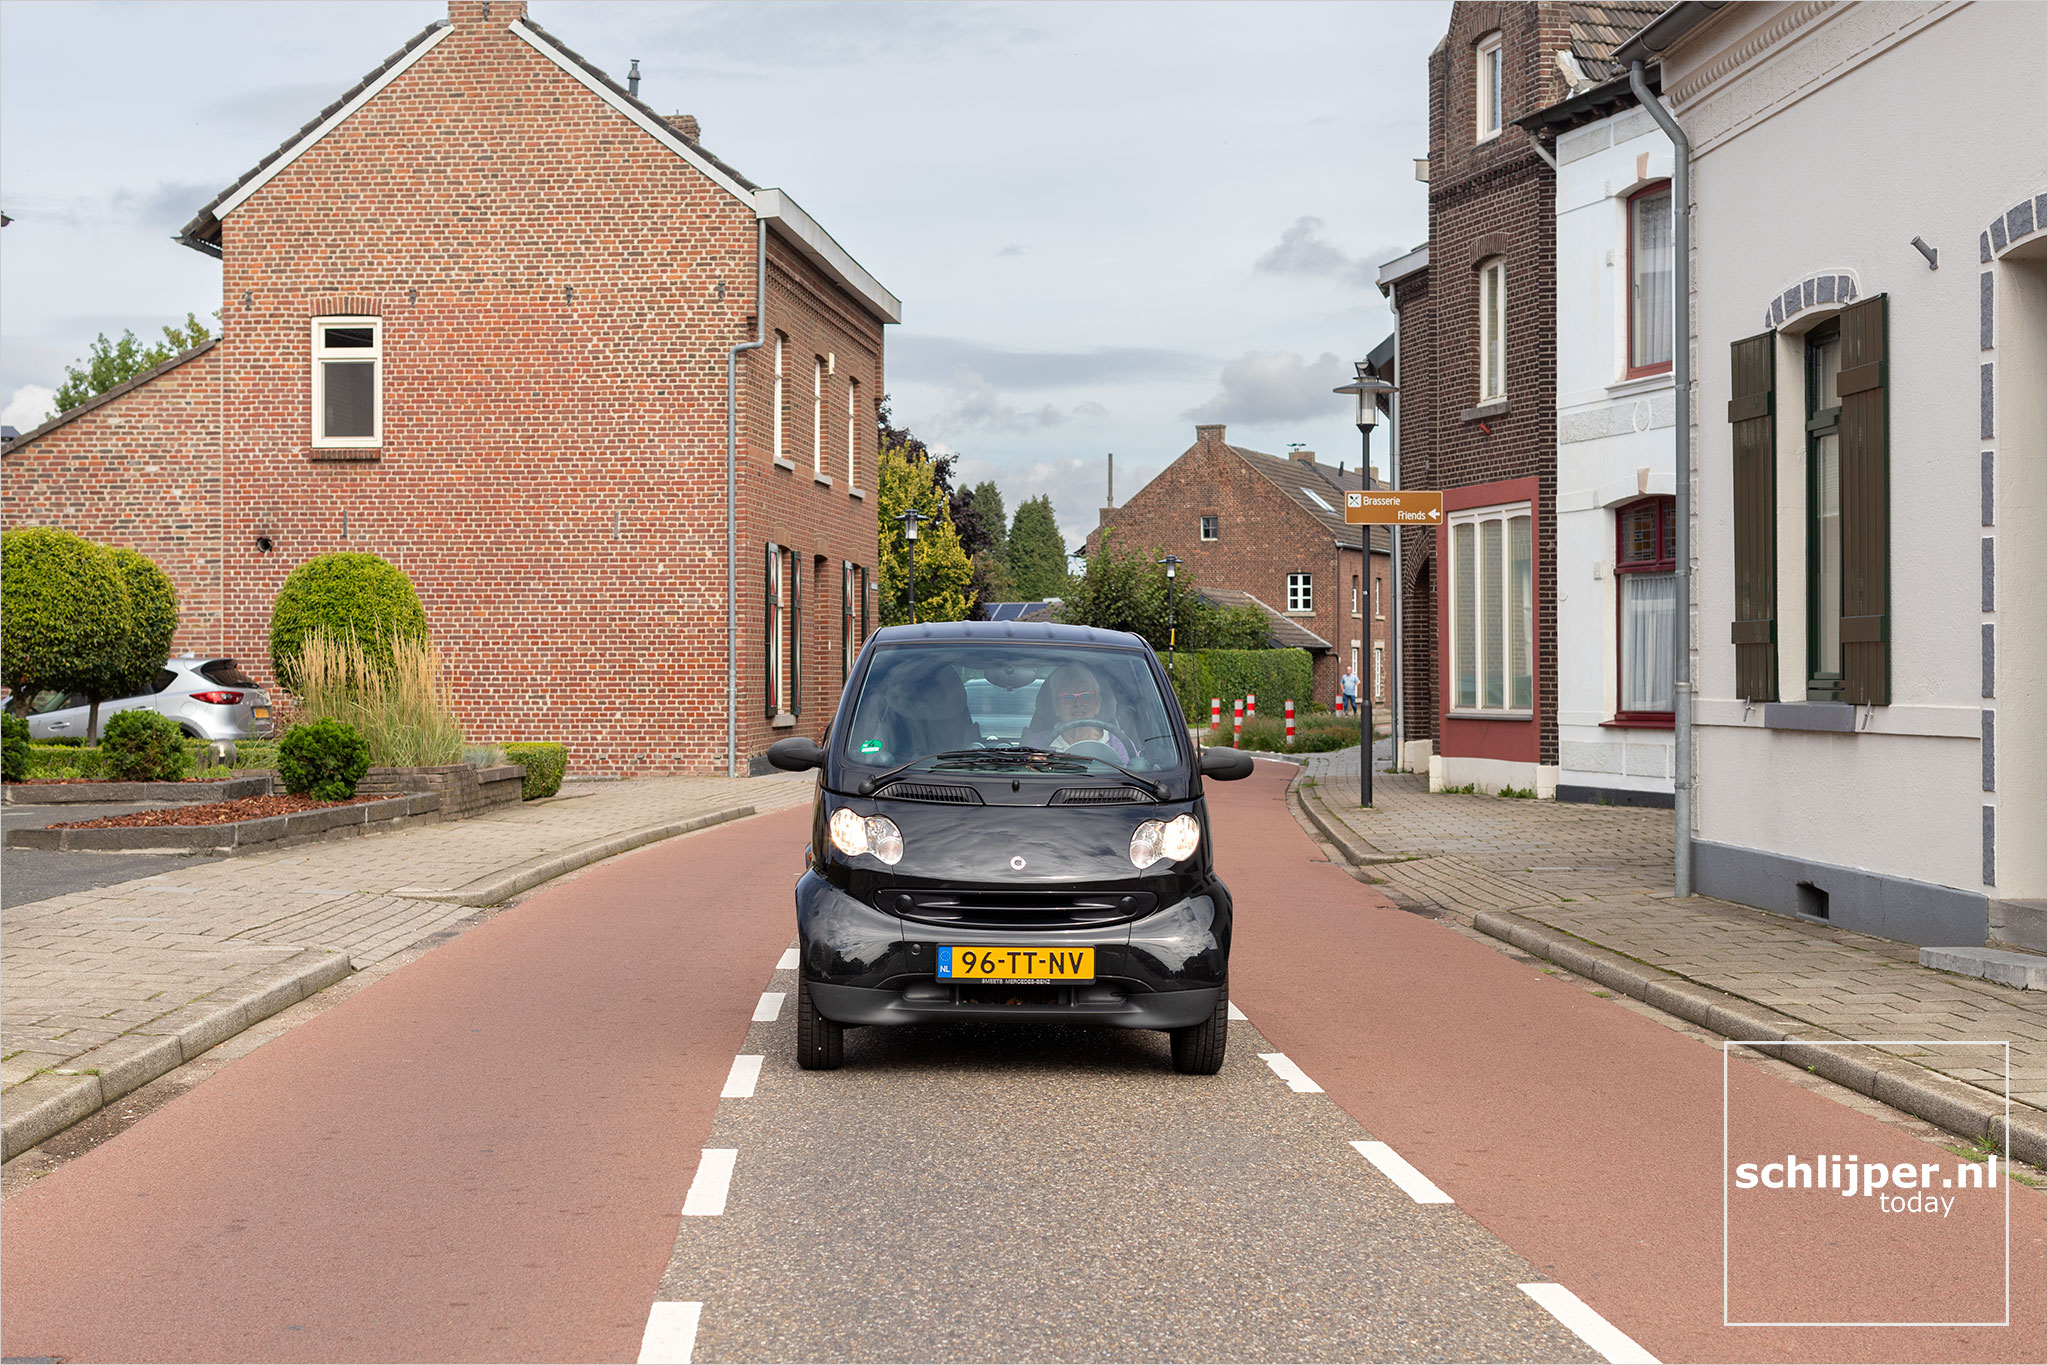 The Netherlands, Vliegenstraat, September 2, 2023